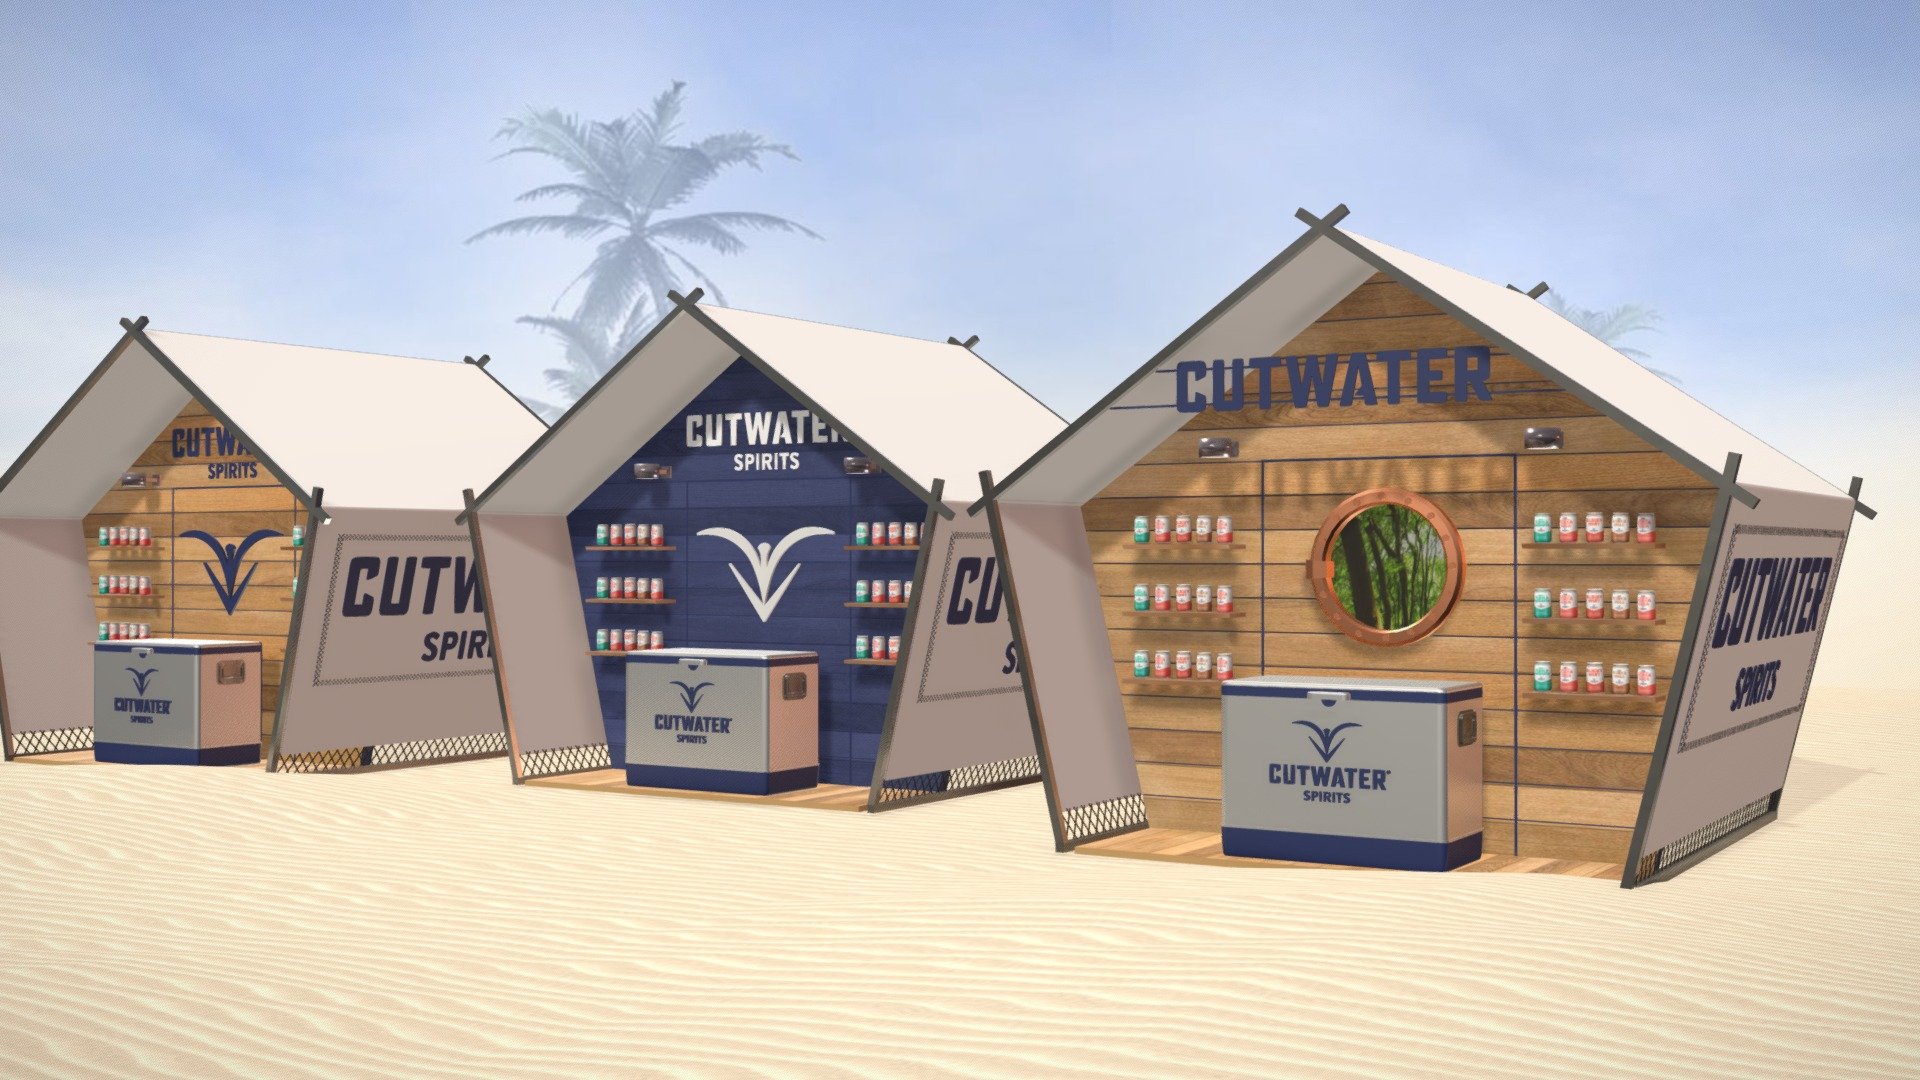 Beach Bar cutwater
By haykel SHABA
Instagram haykel_shaba - Beach Bar cutwater - copy - 3D model by IceboxProductions 3d model